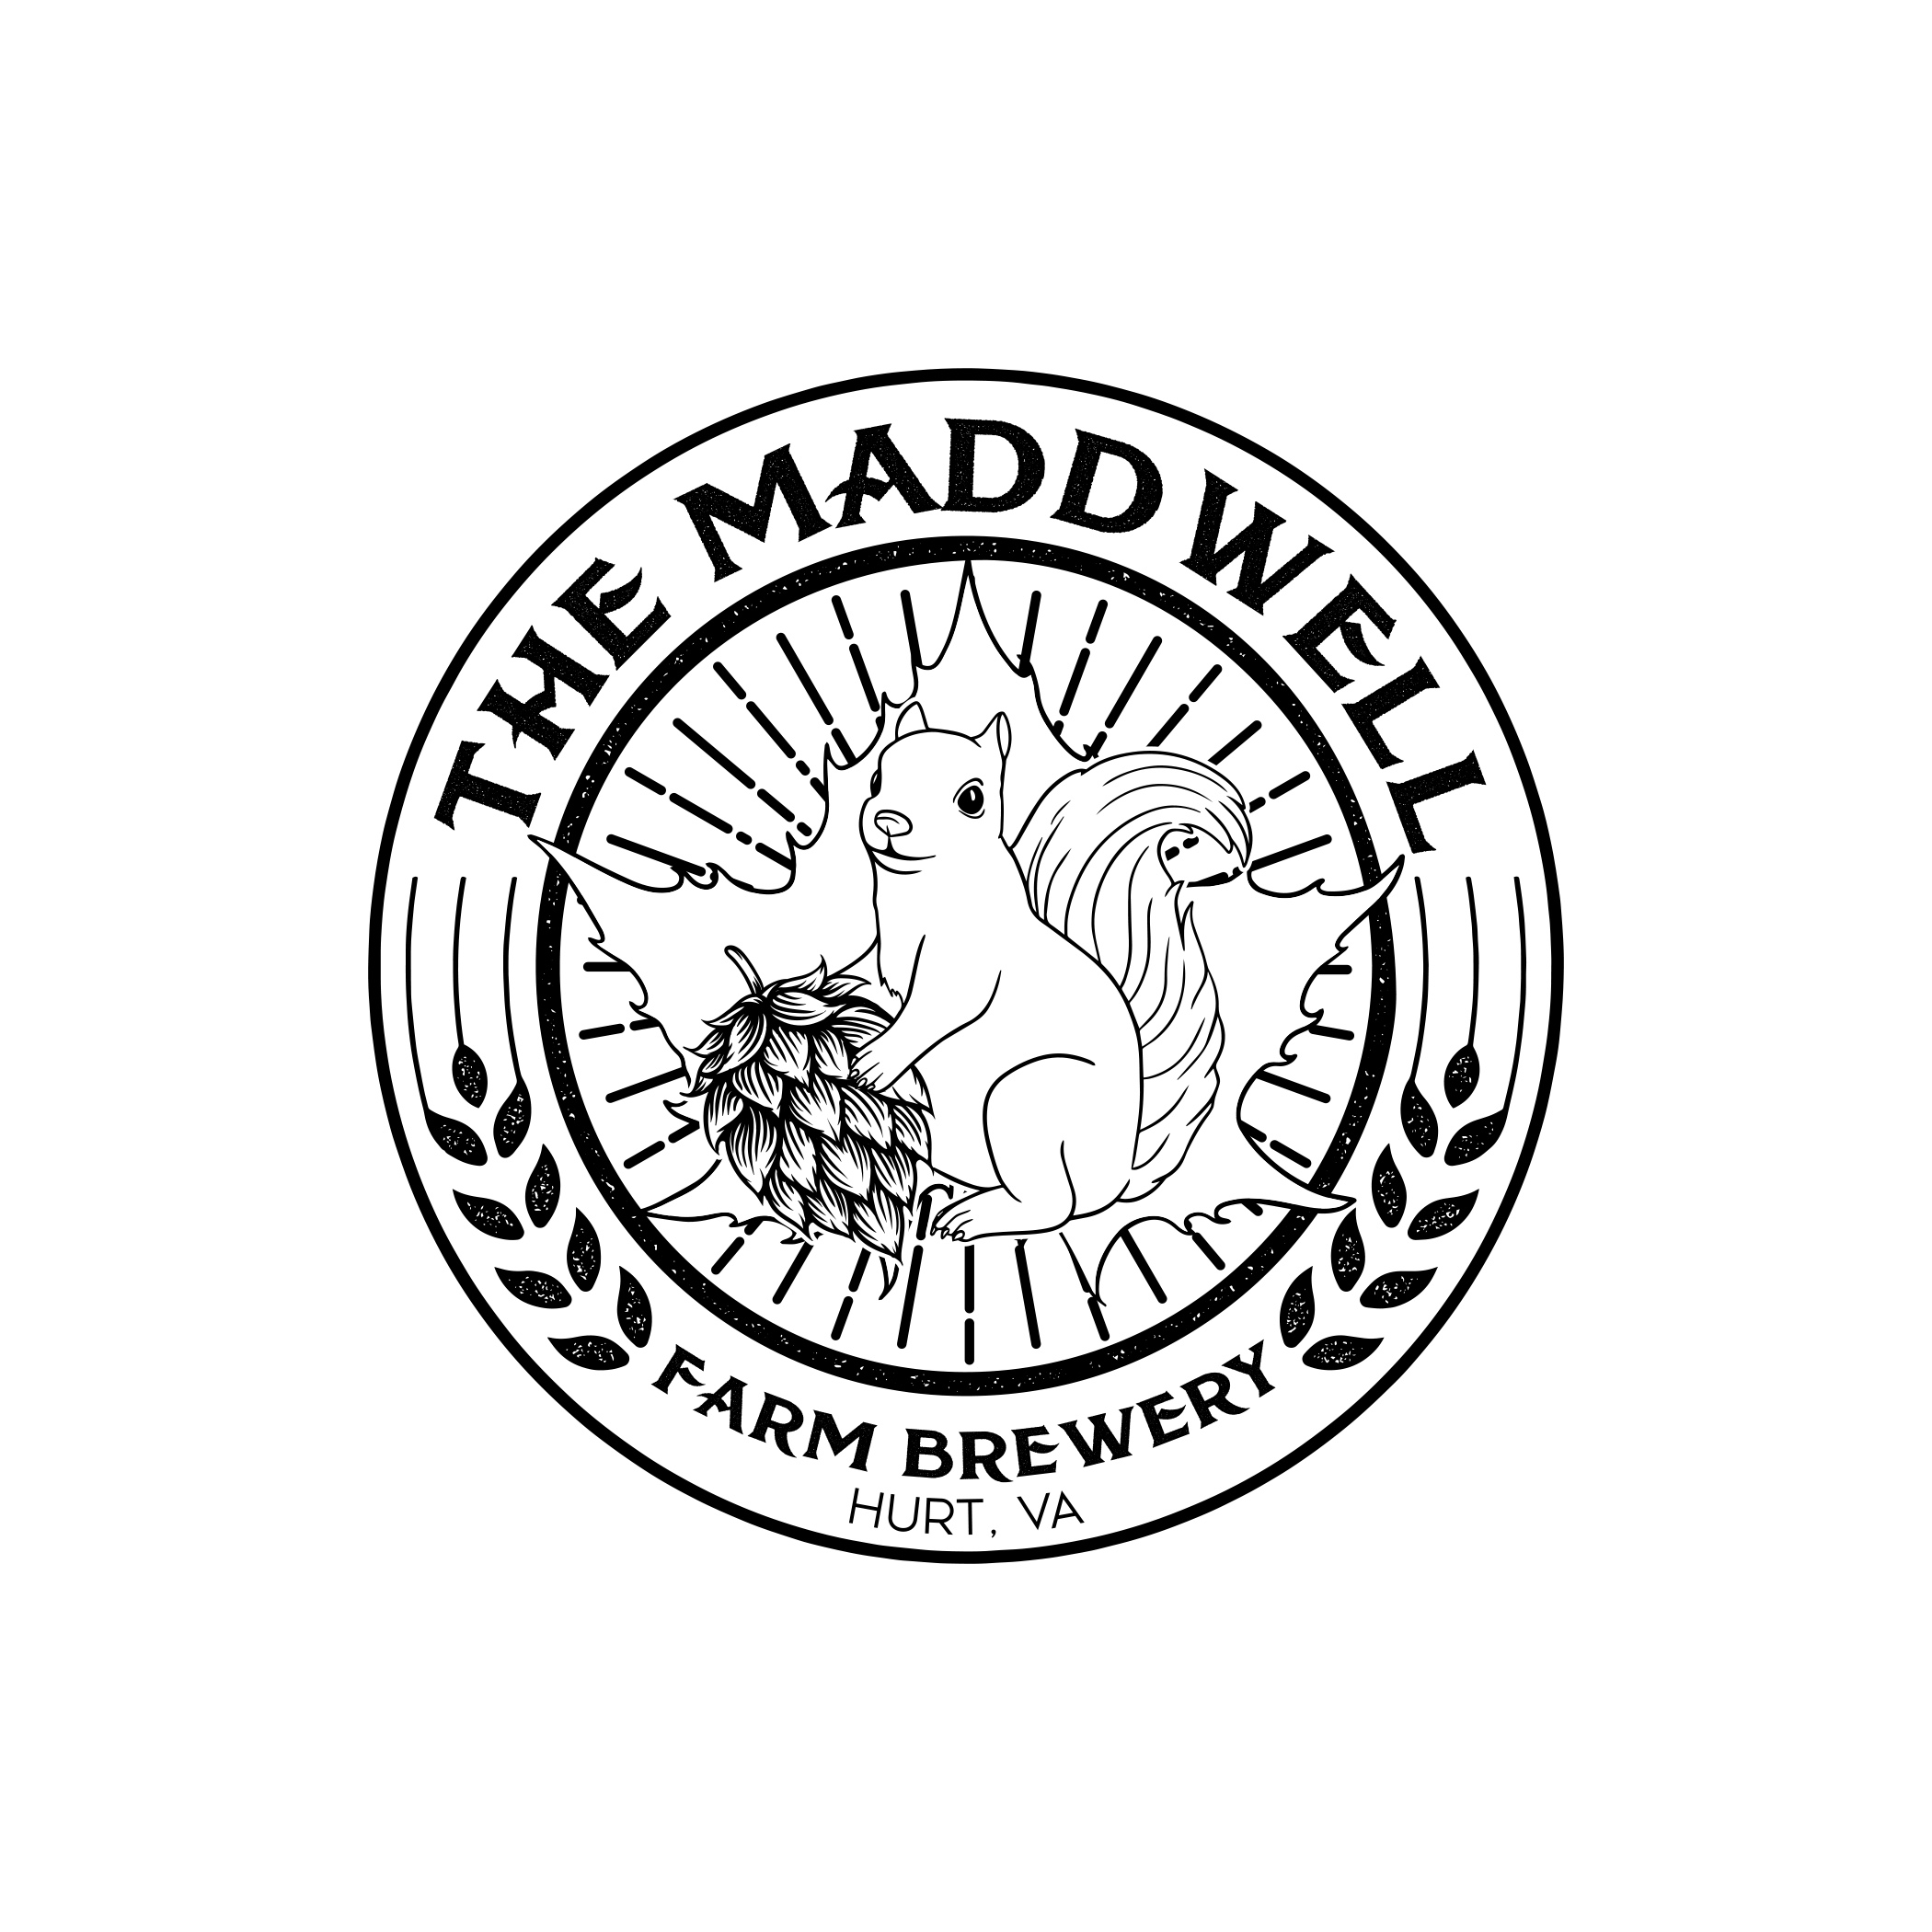 The Maddwell Farm Brewery Logo Social Media Square.jpg